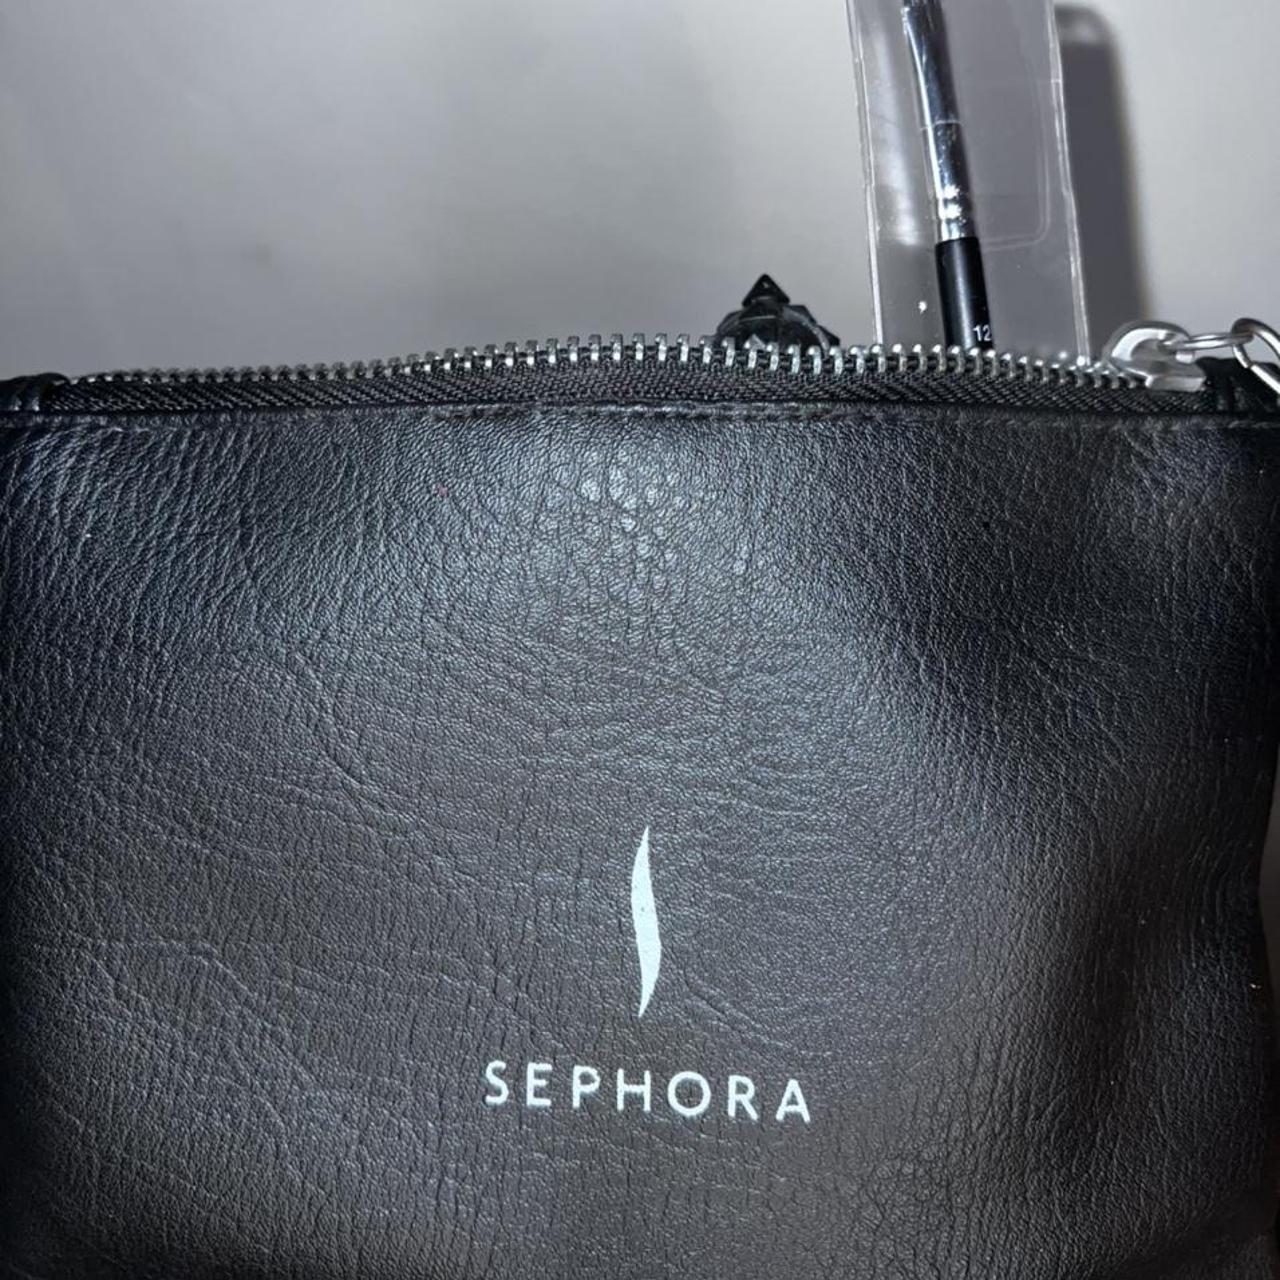 Sephora Women's Black and White Bag